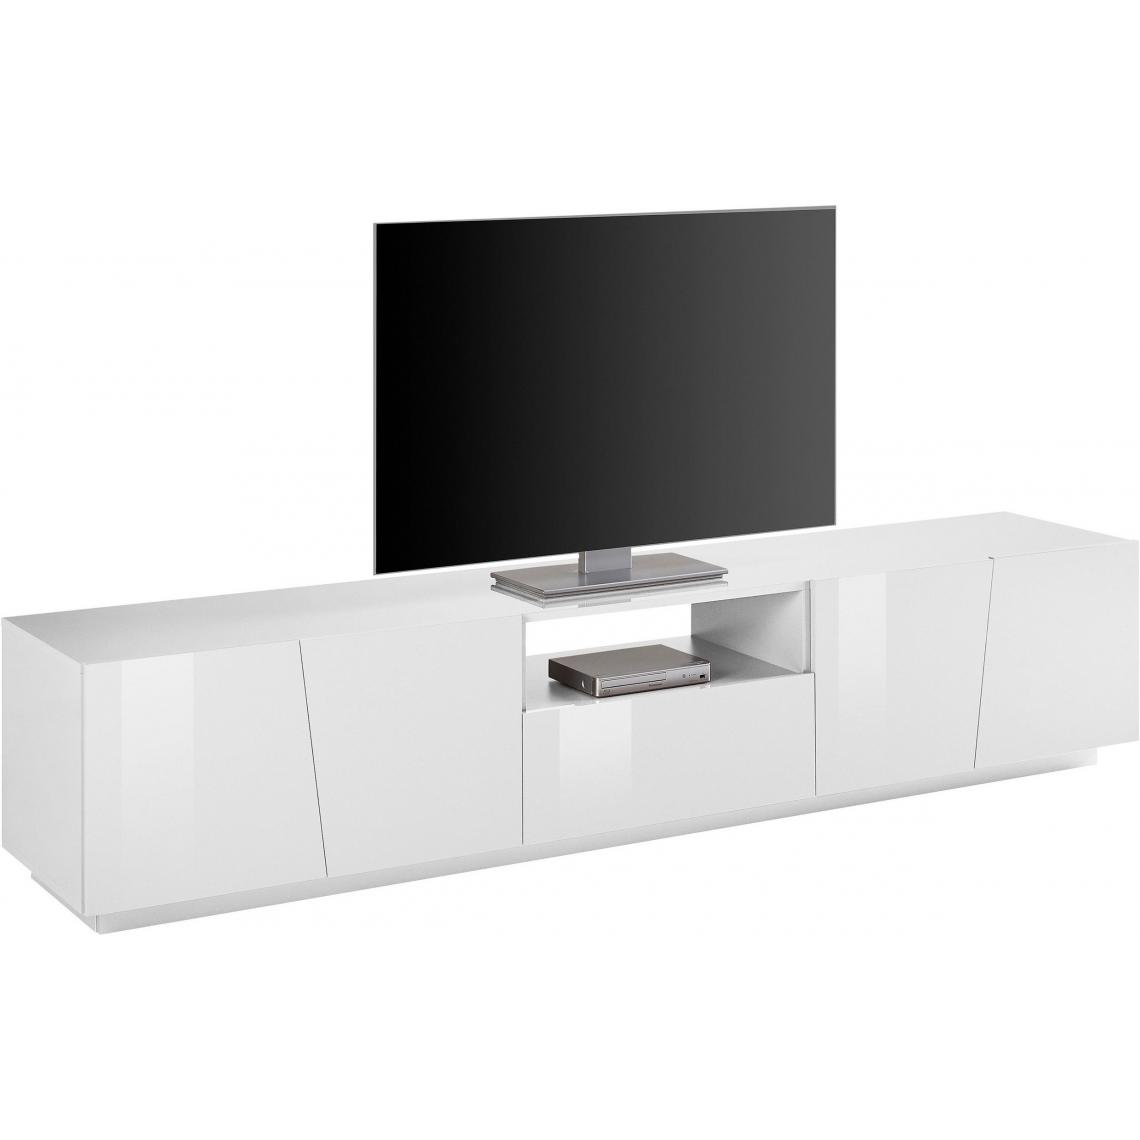 Alter - Meuble TV de salon, Made in Italy, Meuble TV avec 4 portes et 1 tiroir, 220x43h46 cm, couleur blanc brillant - Meubles TV, Hi-Fi